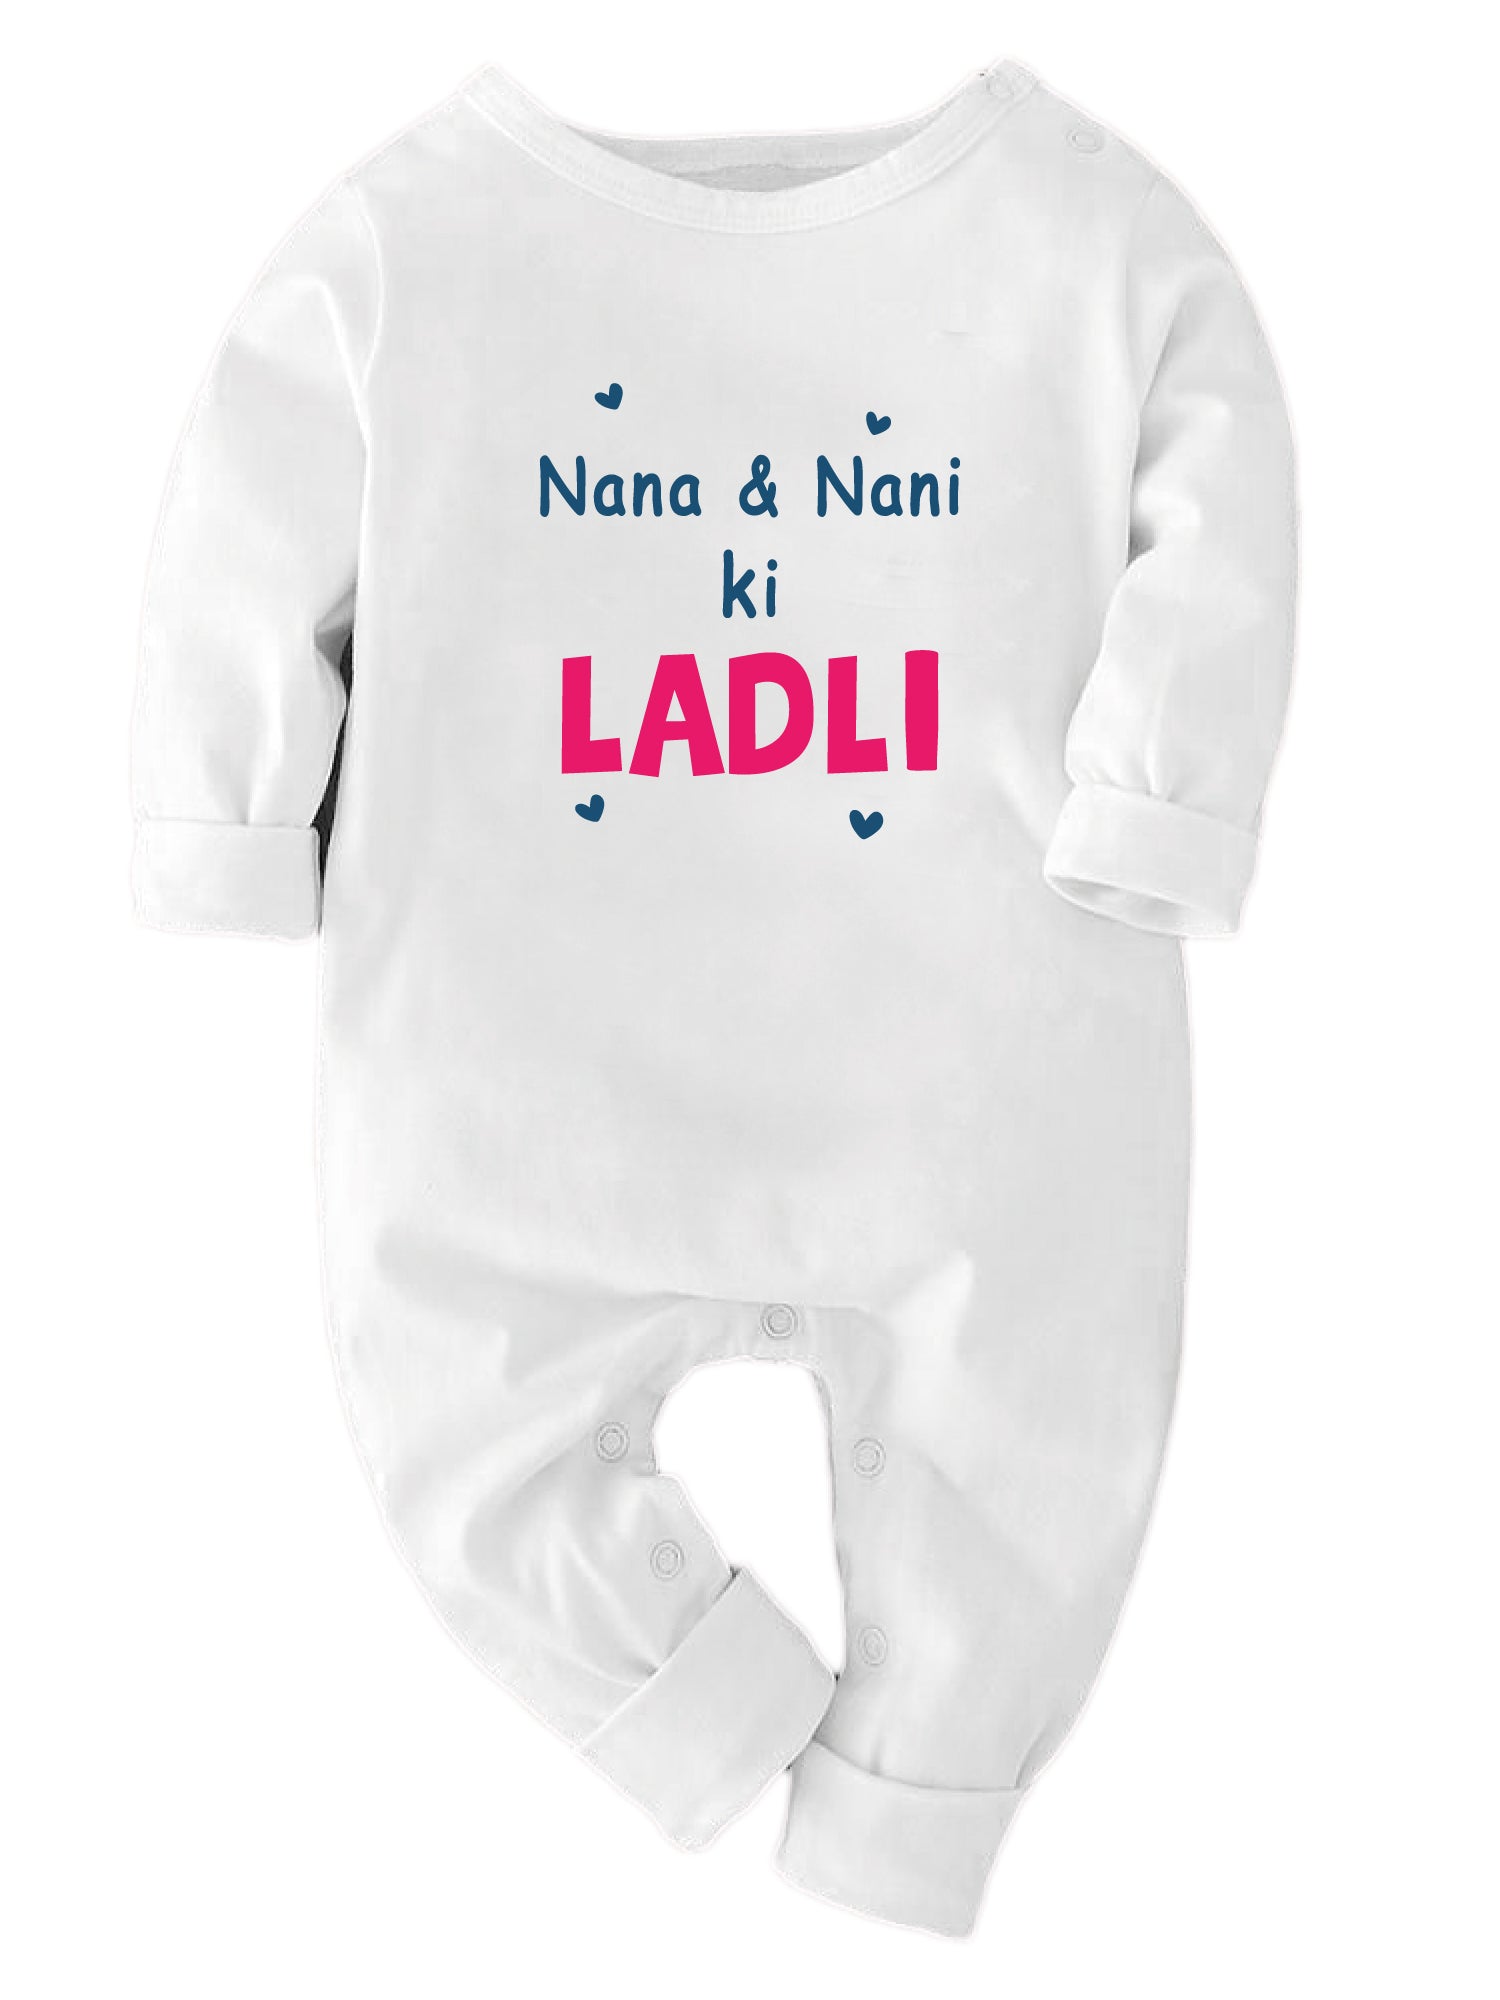 Nana and Nani Ki Ladli - Bodysuit